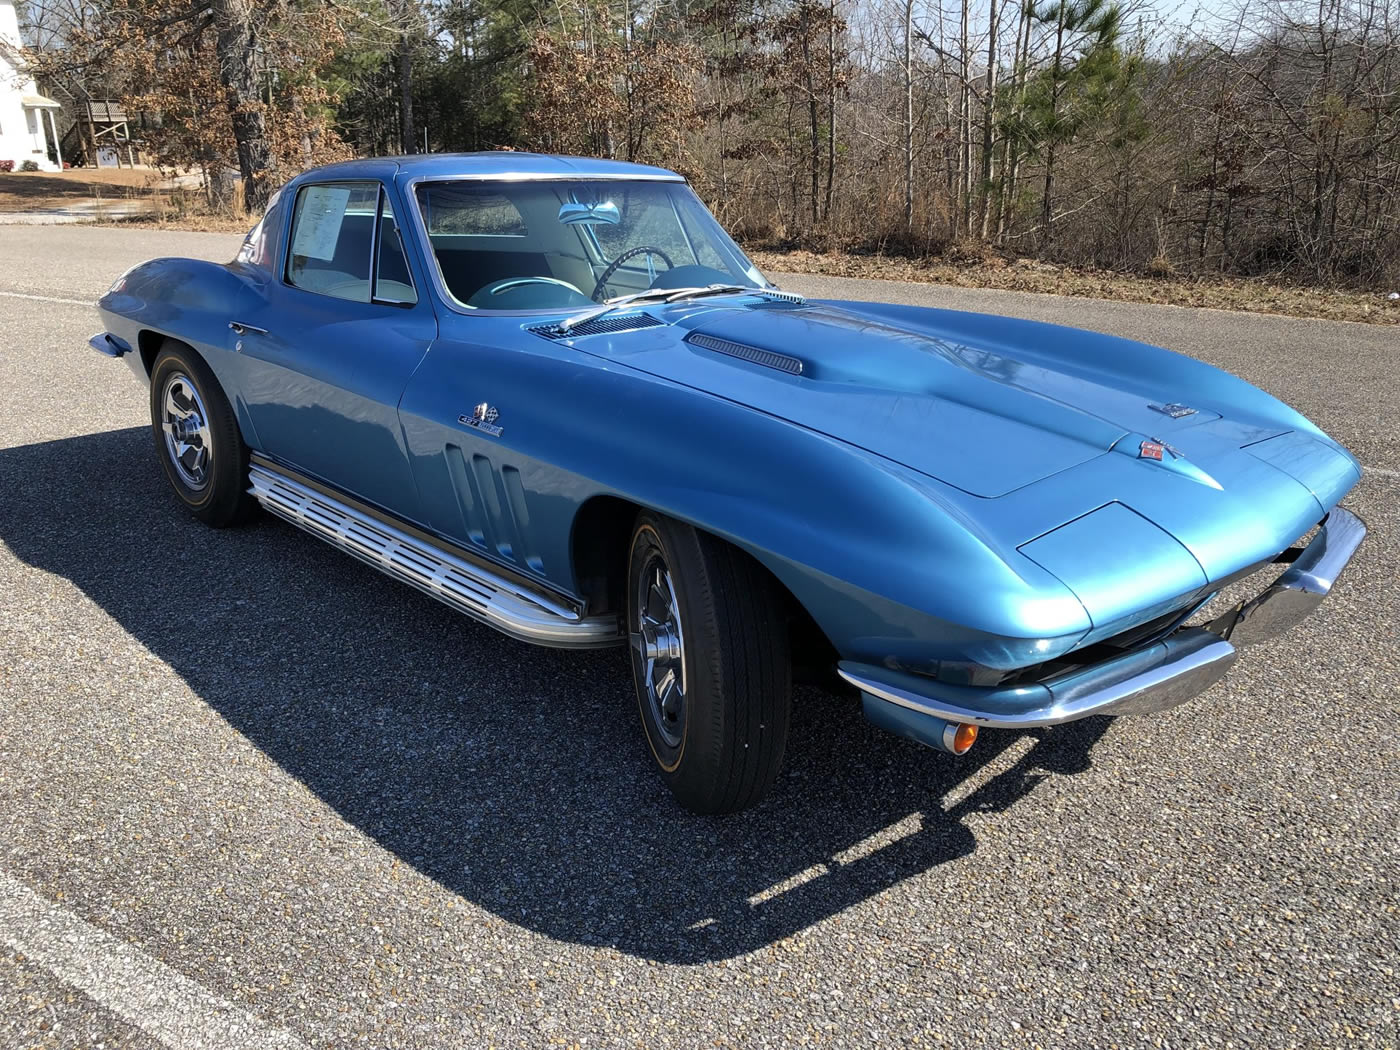 1966 Corvette Coupe L72 427/425 4-Speed in Nassau Blue